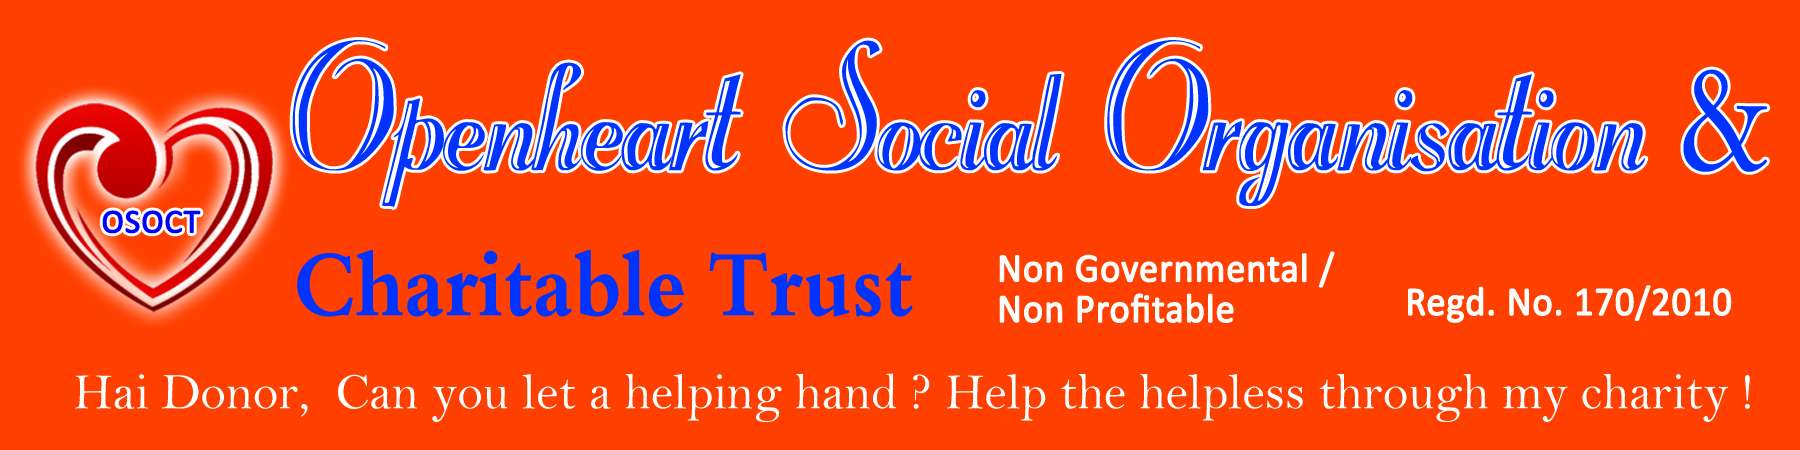 Openheart Social Organisation And Charitable Trust